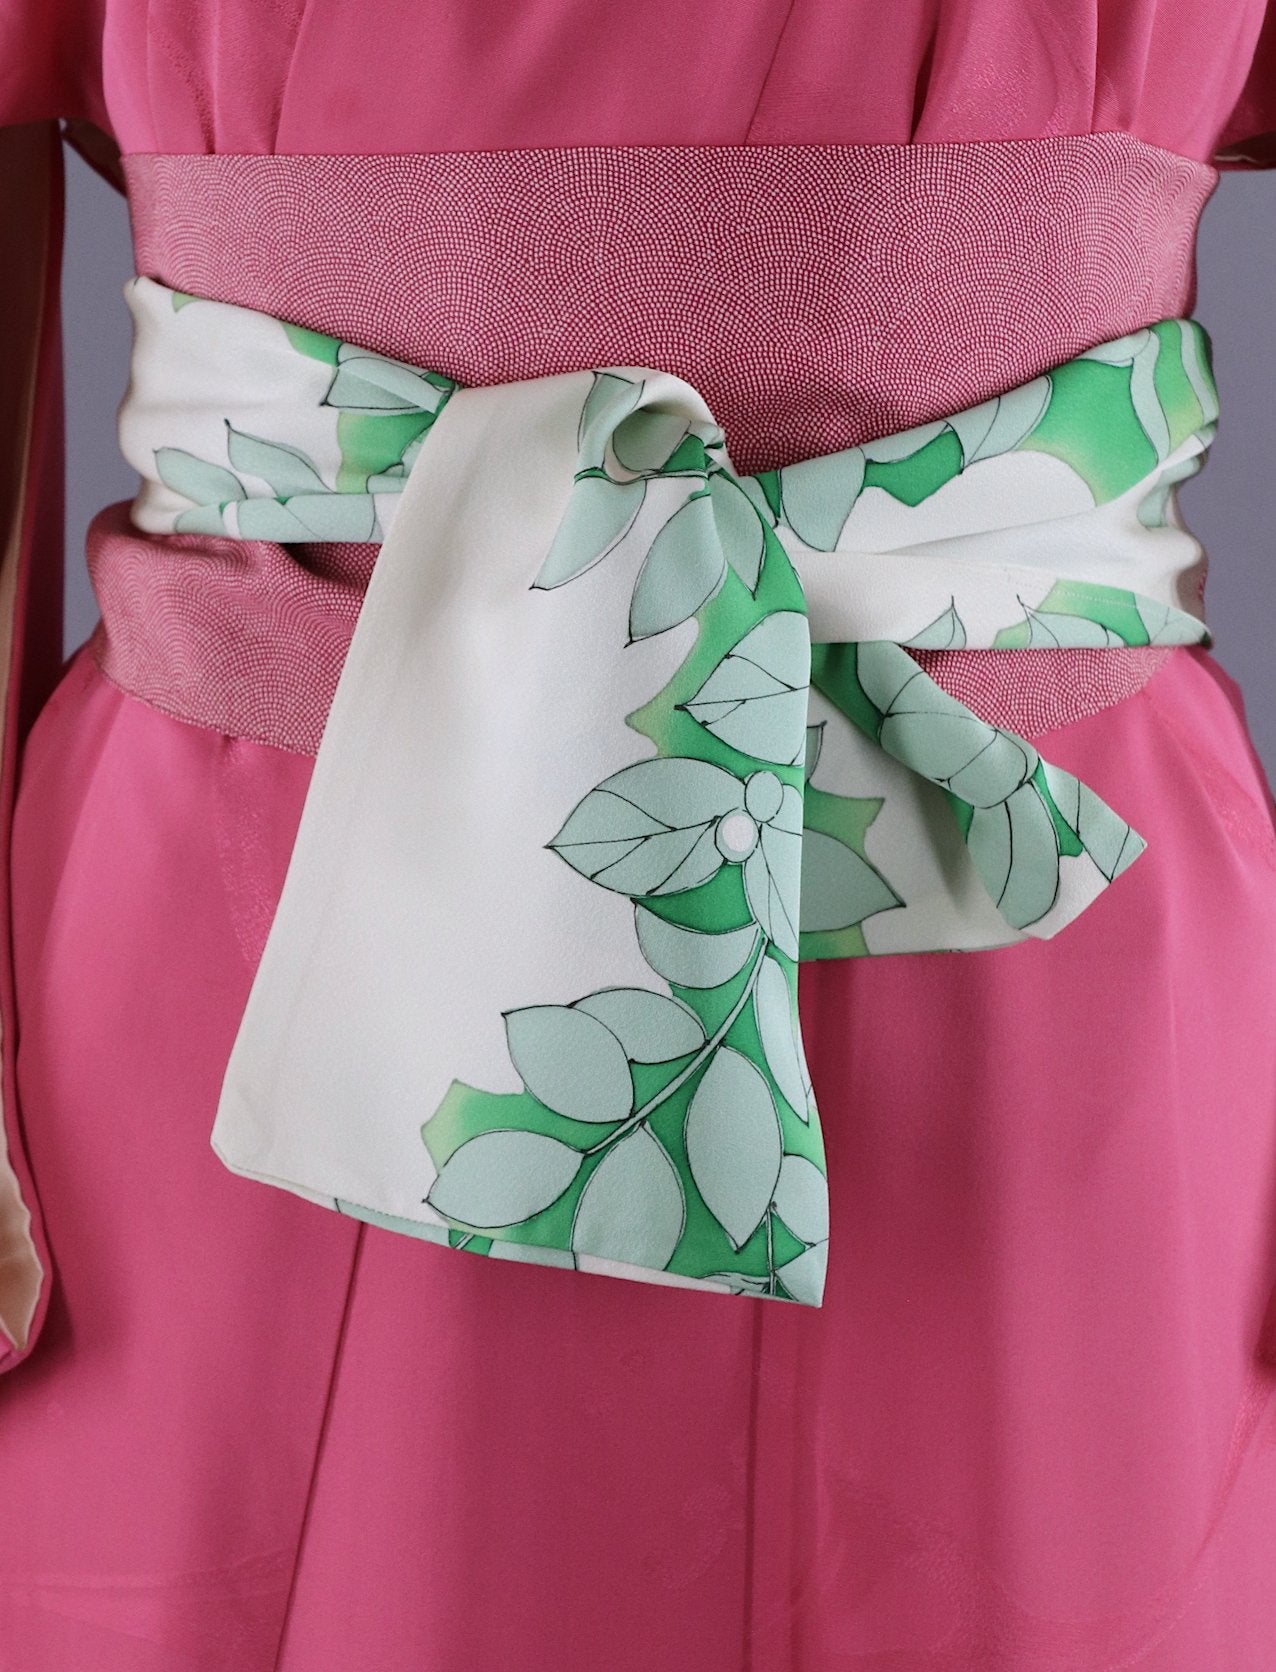 Vintage 1950s Silk Kimono Robe / Bright Pink - ThisBlueBird